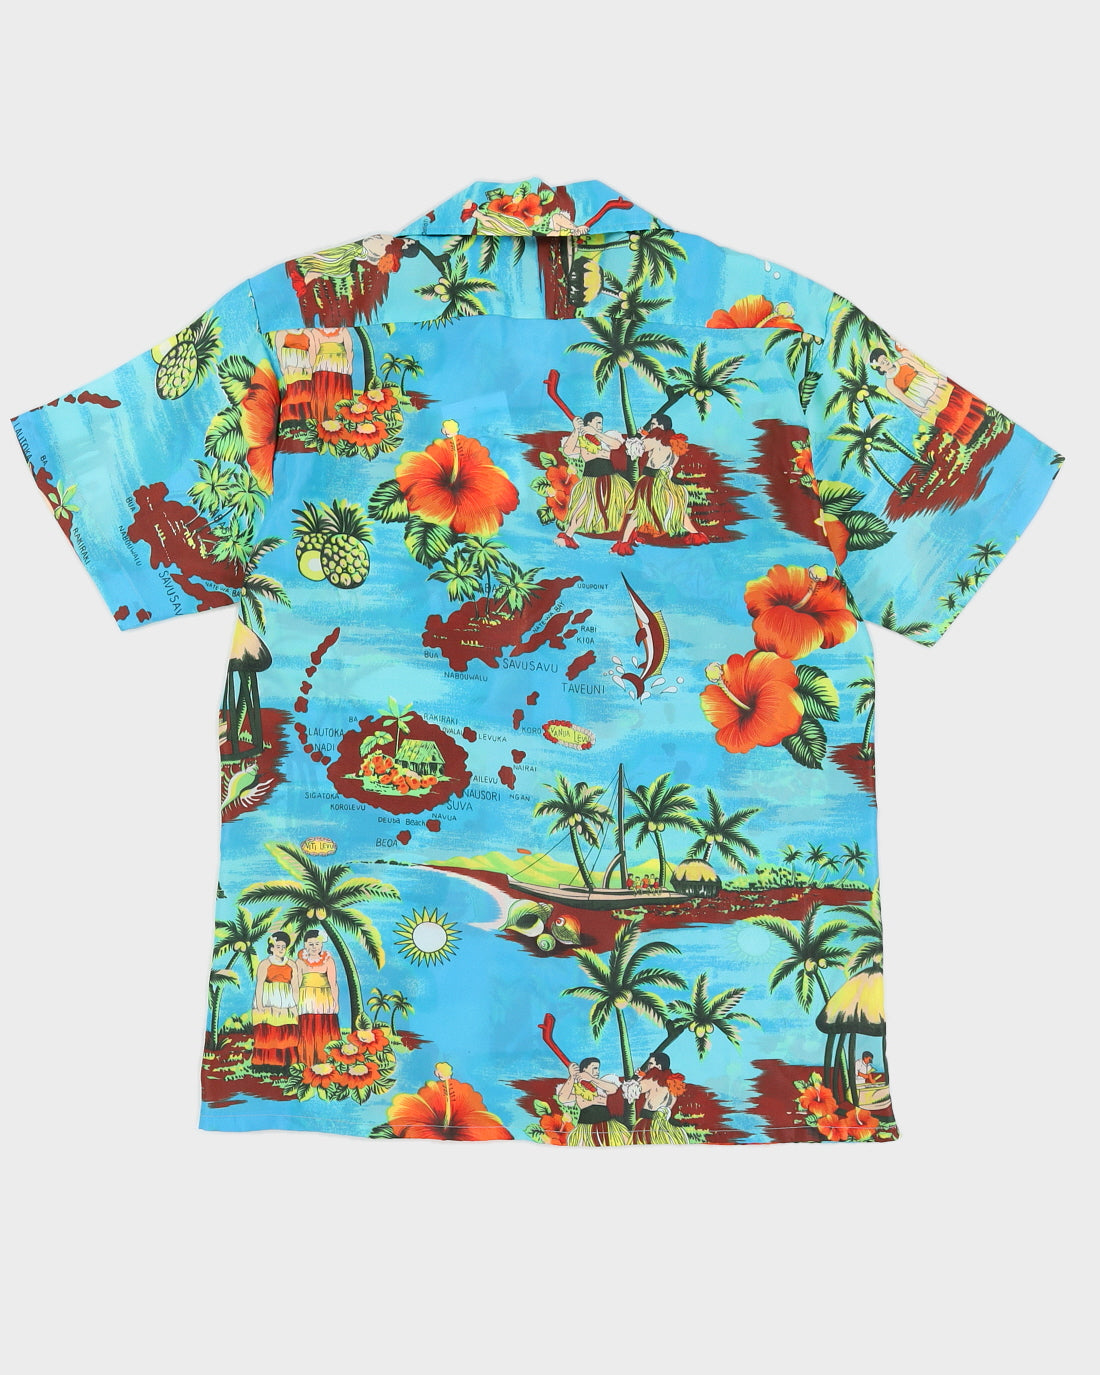 Vintage 1970s Blue Floral Hawaiian Shirt - M